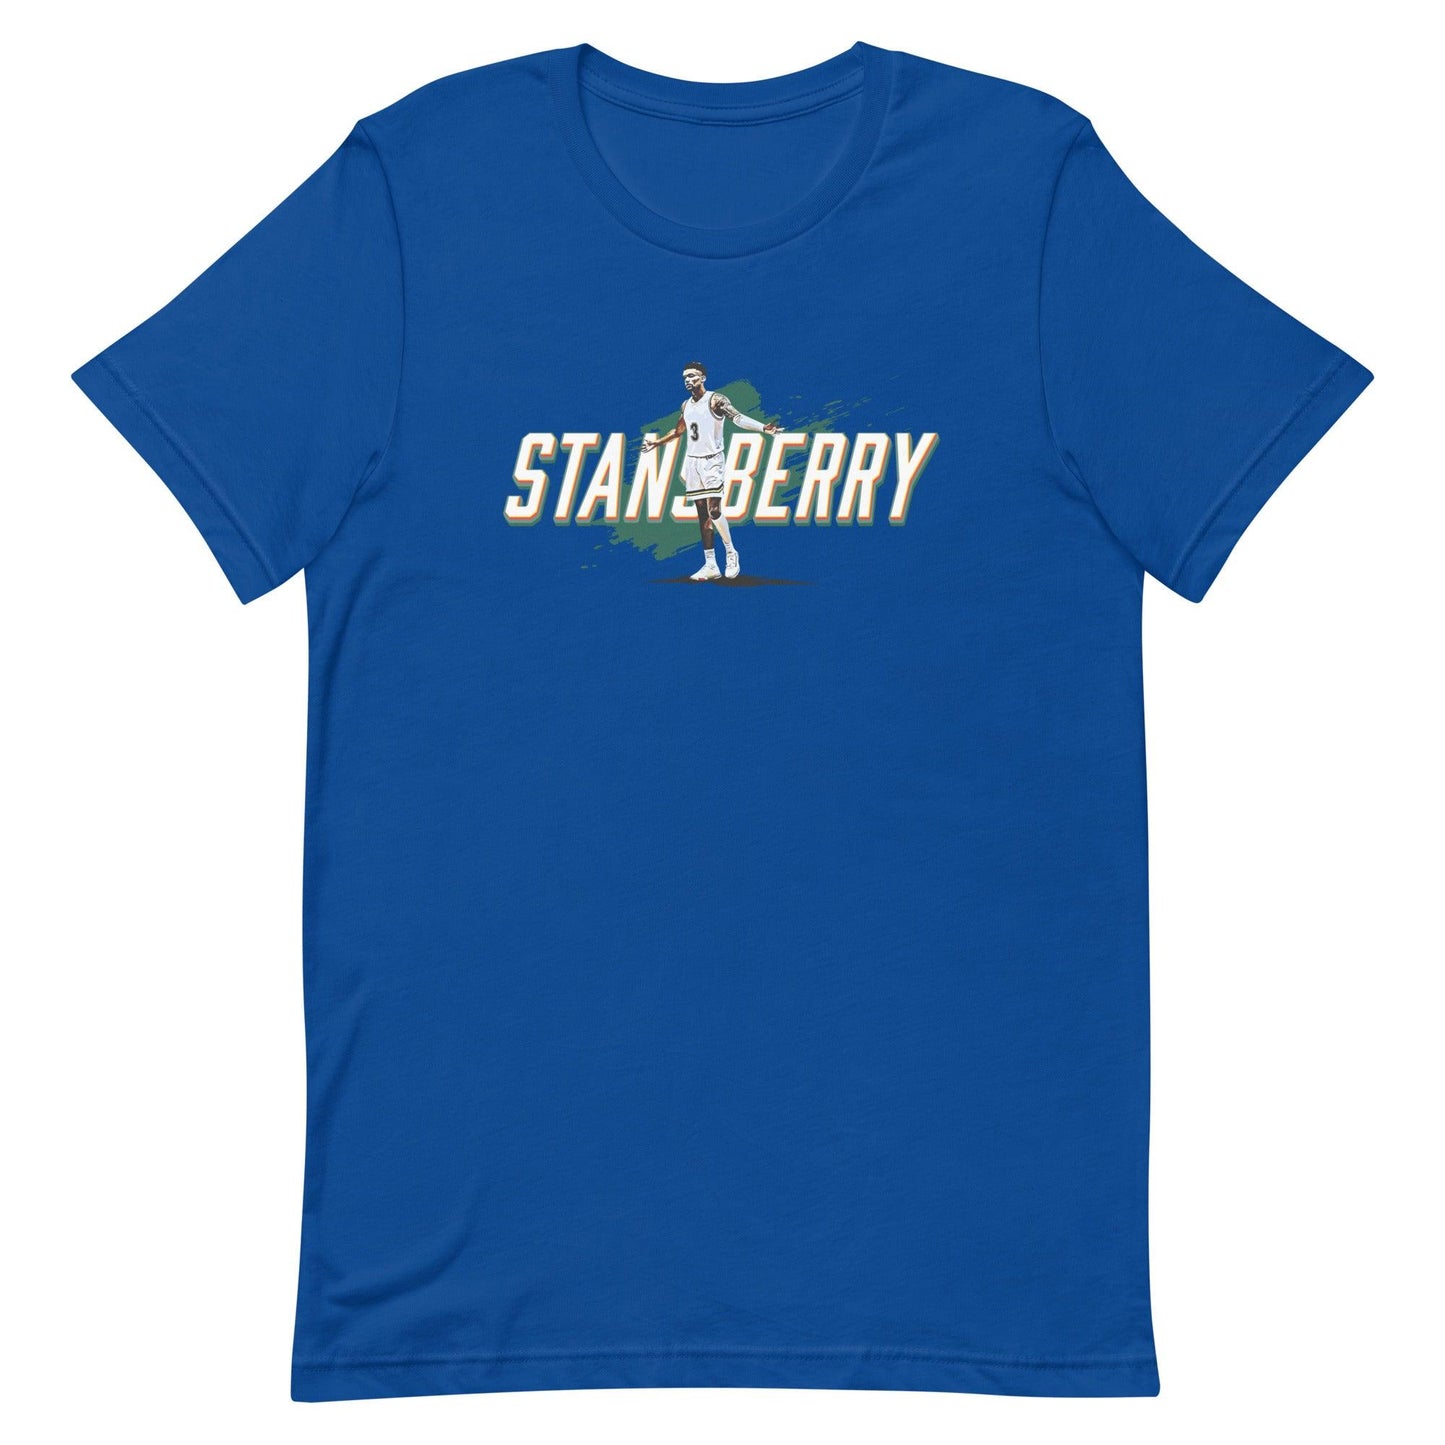 Eddie Stansberry “Essential” t-shirt - Fan Arch